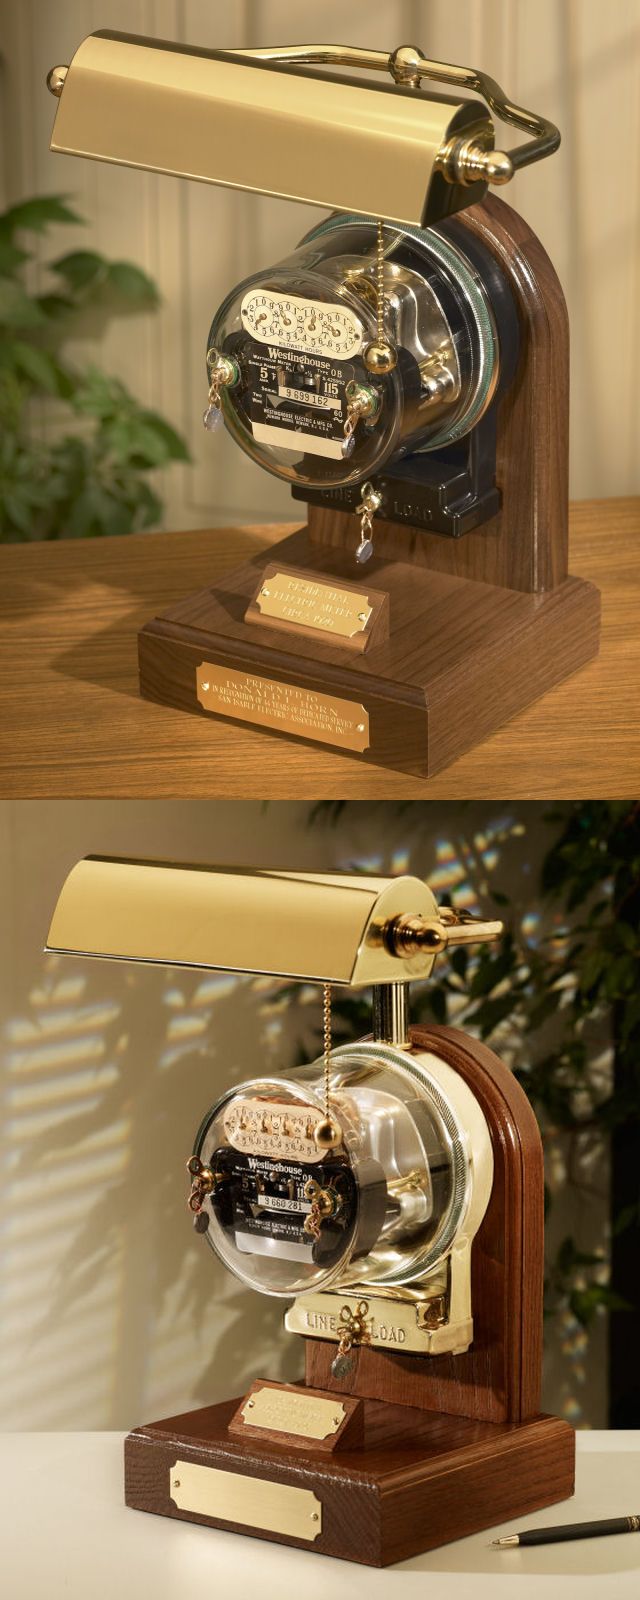 The Ambassador Antique Residential Meter Lamp